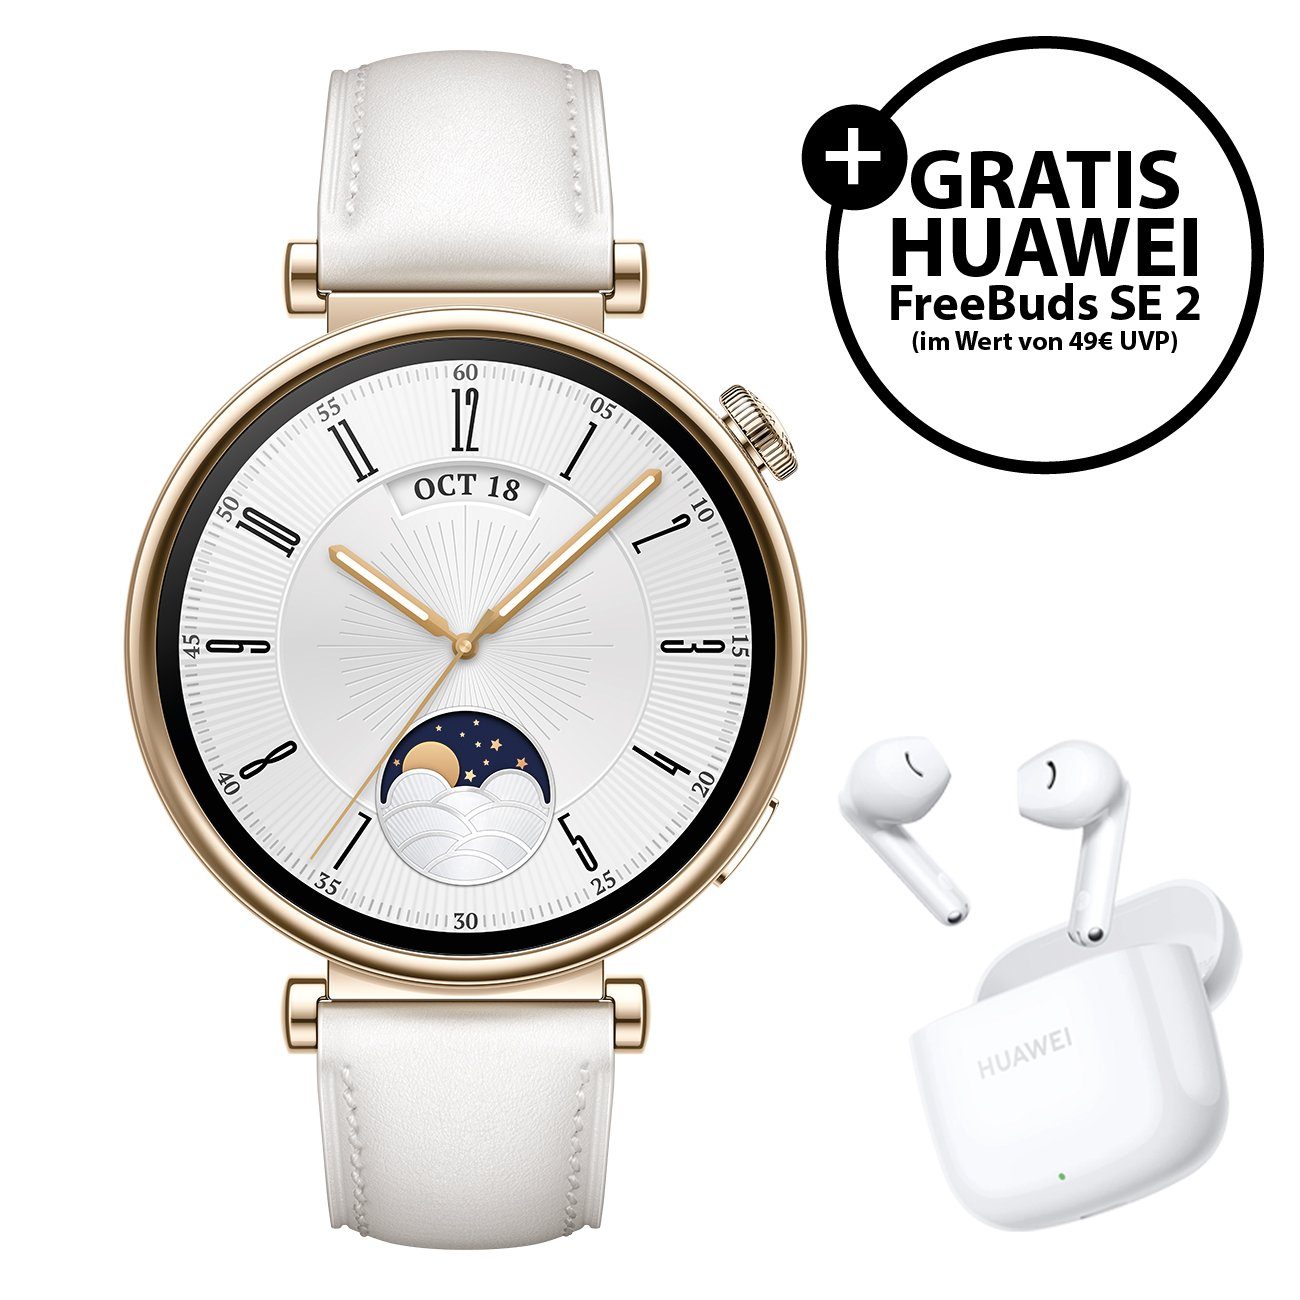 GT4 41mm 2 Huawei Watch Smartwatch (weiß) SE FreeBuds inkl.